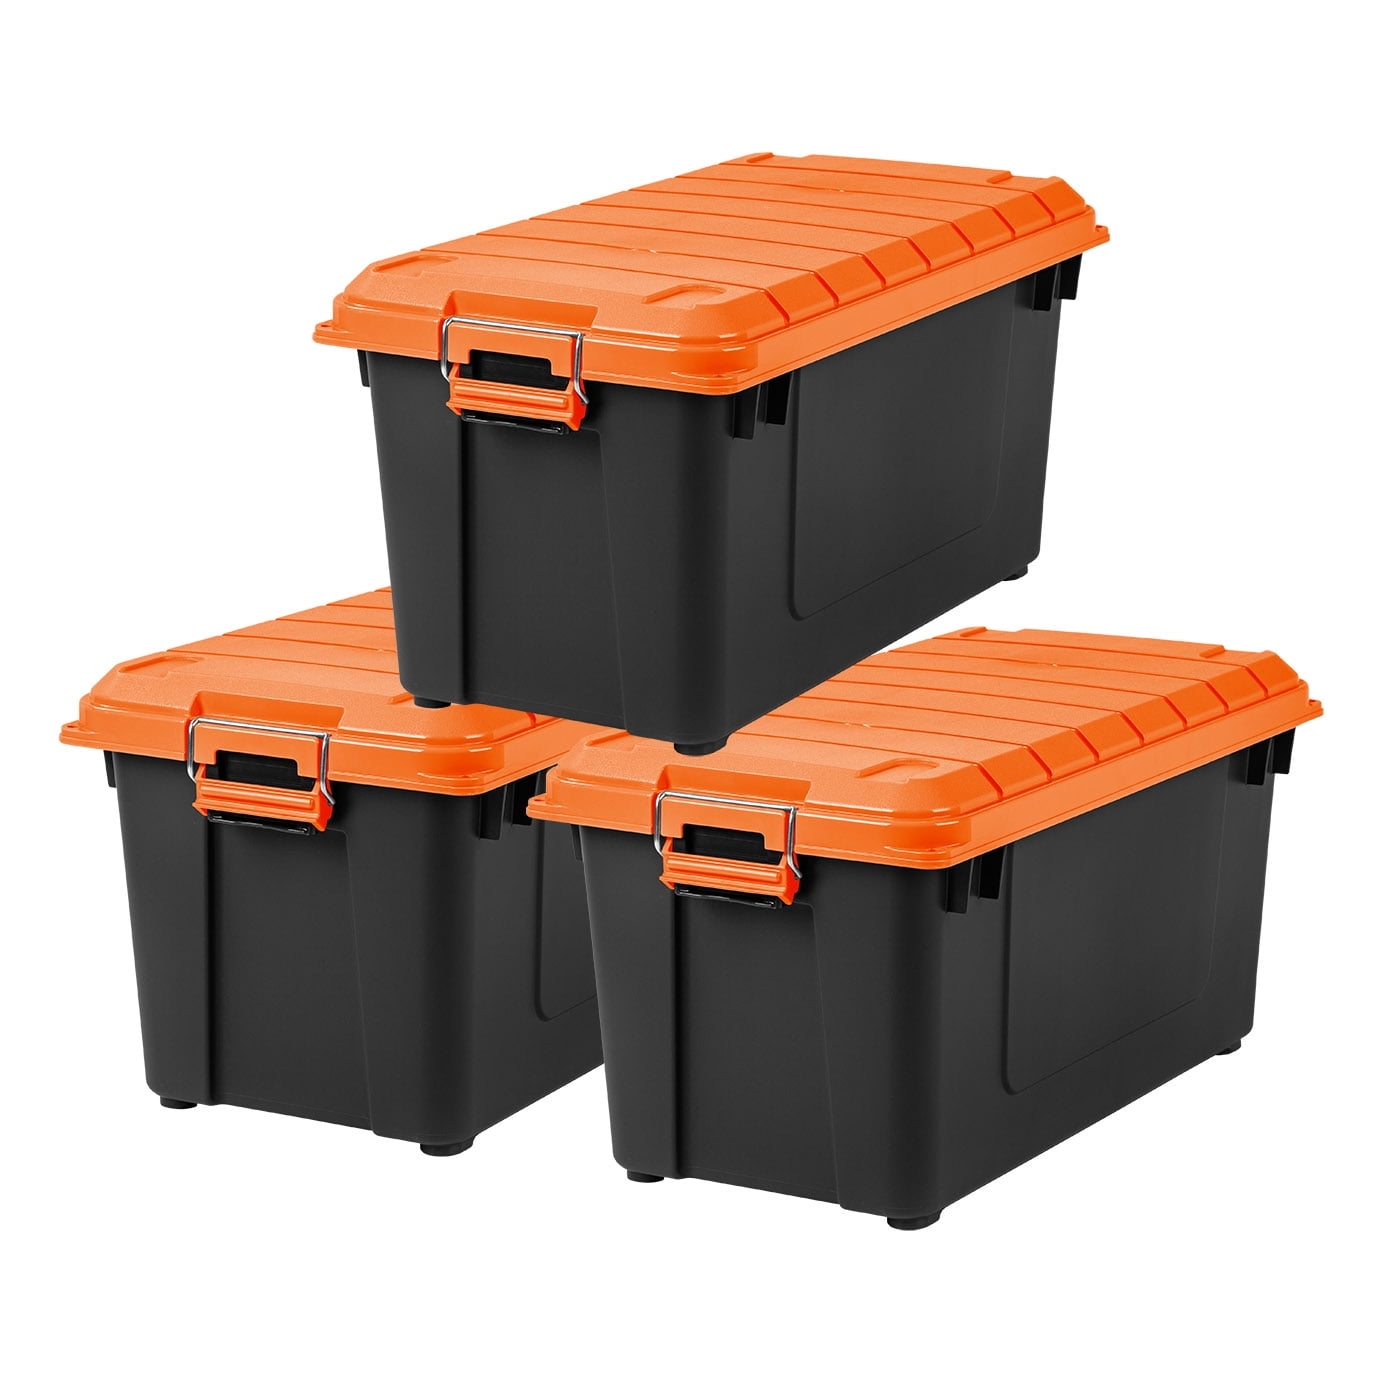 Locking Storage Container Bin - Safety & Security Storage Box (21 Gal.  Capacity)